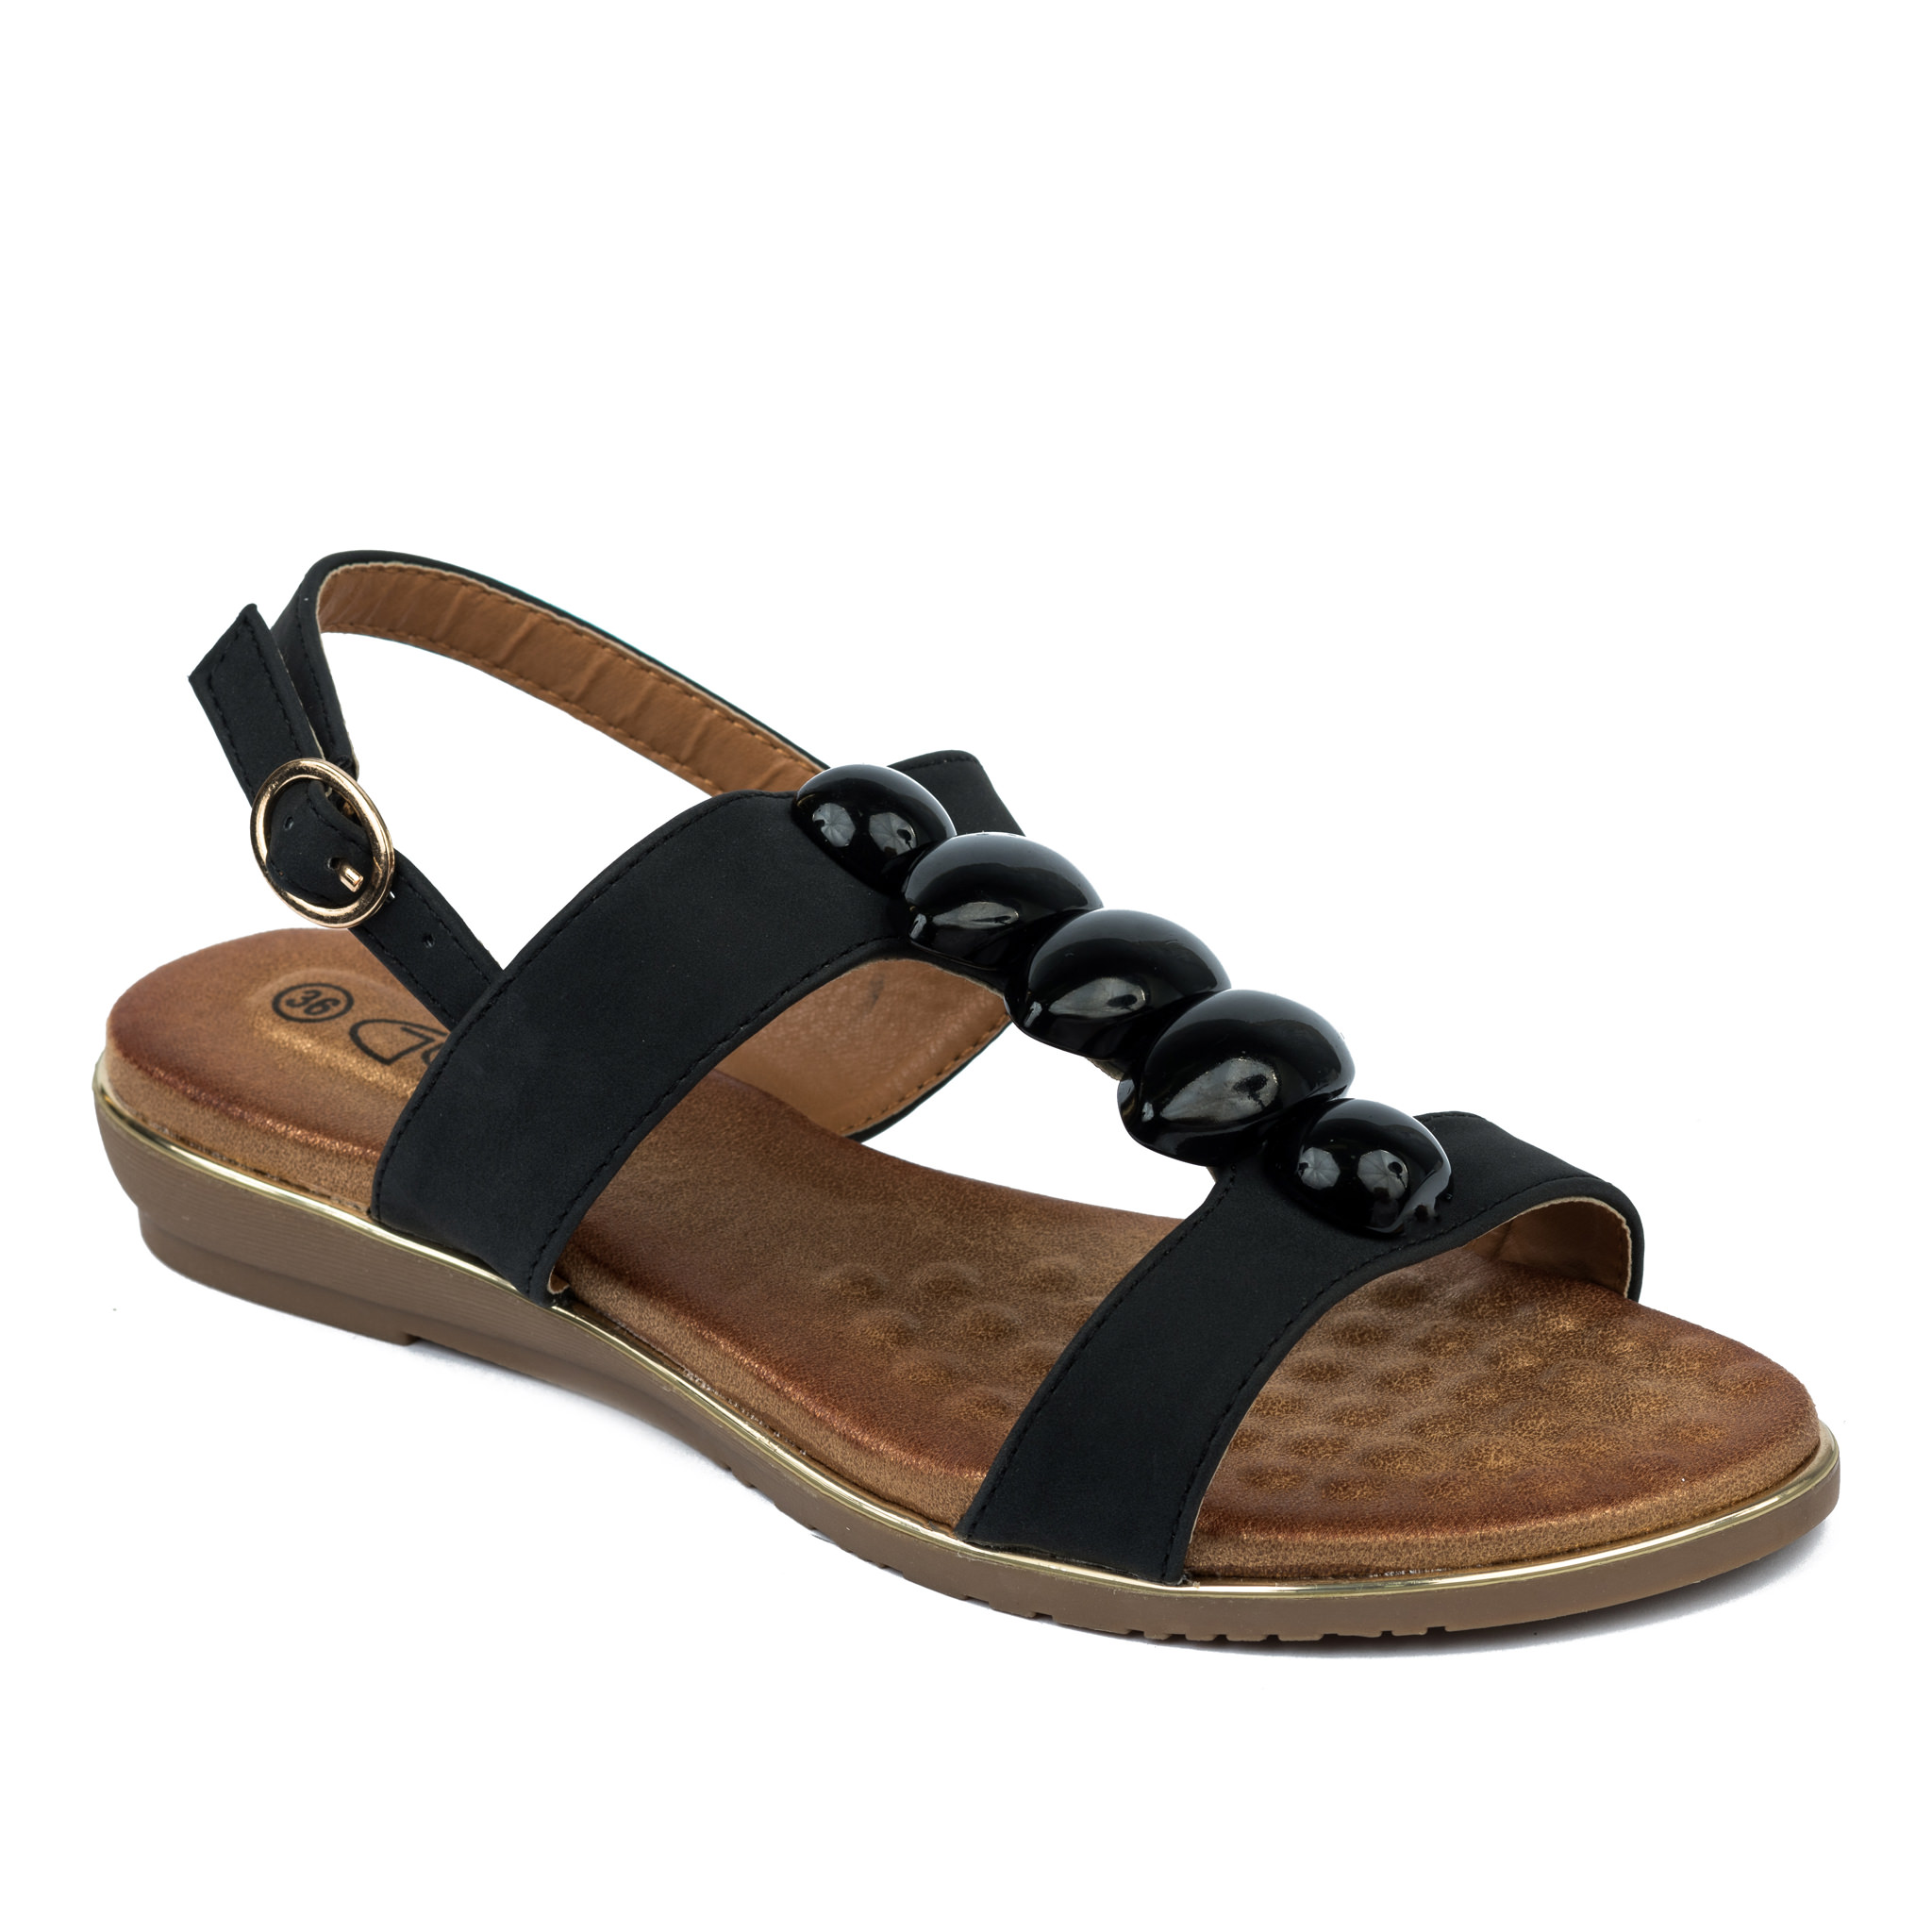 Women sandals A669 - BLACK